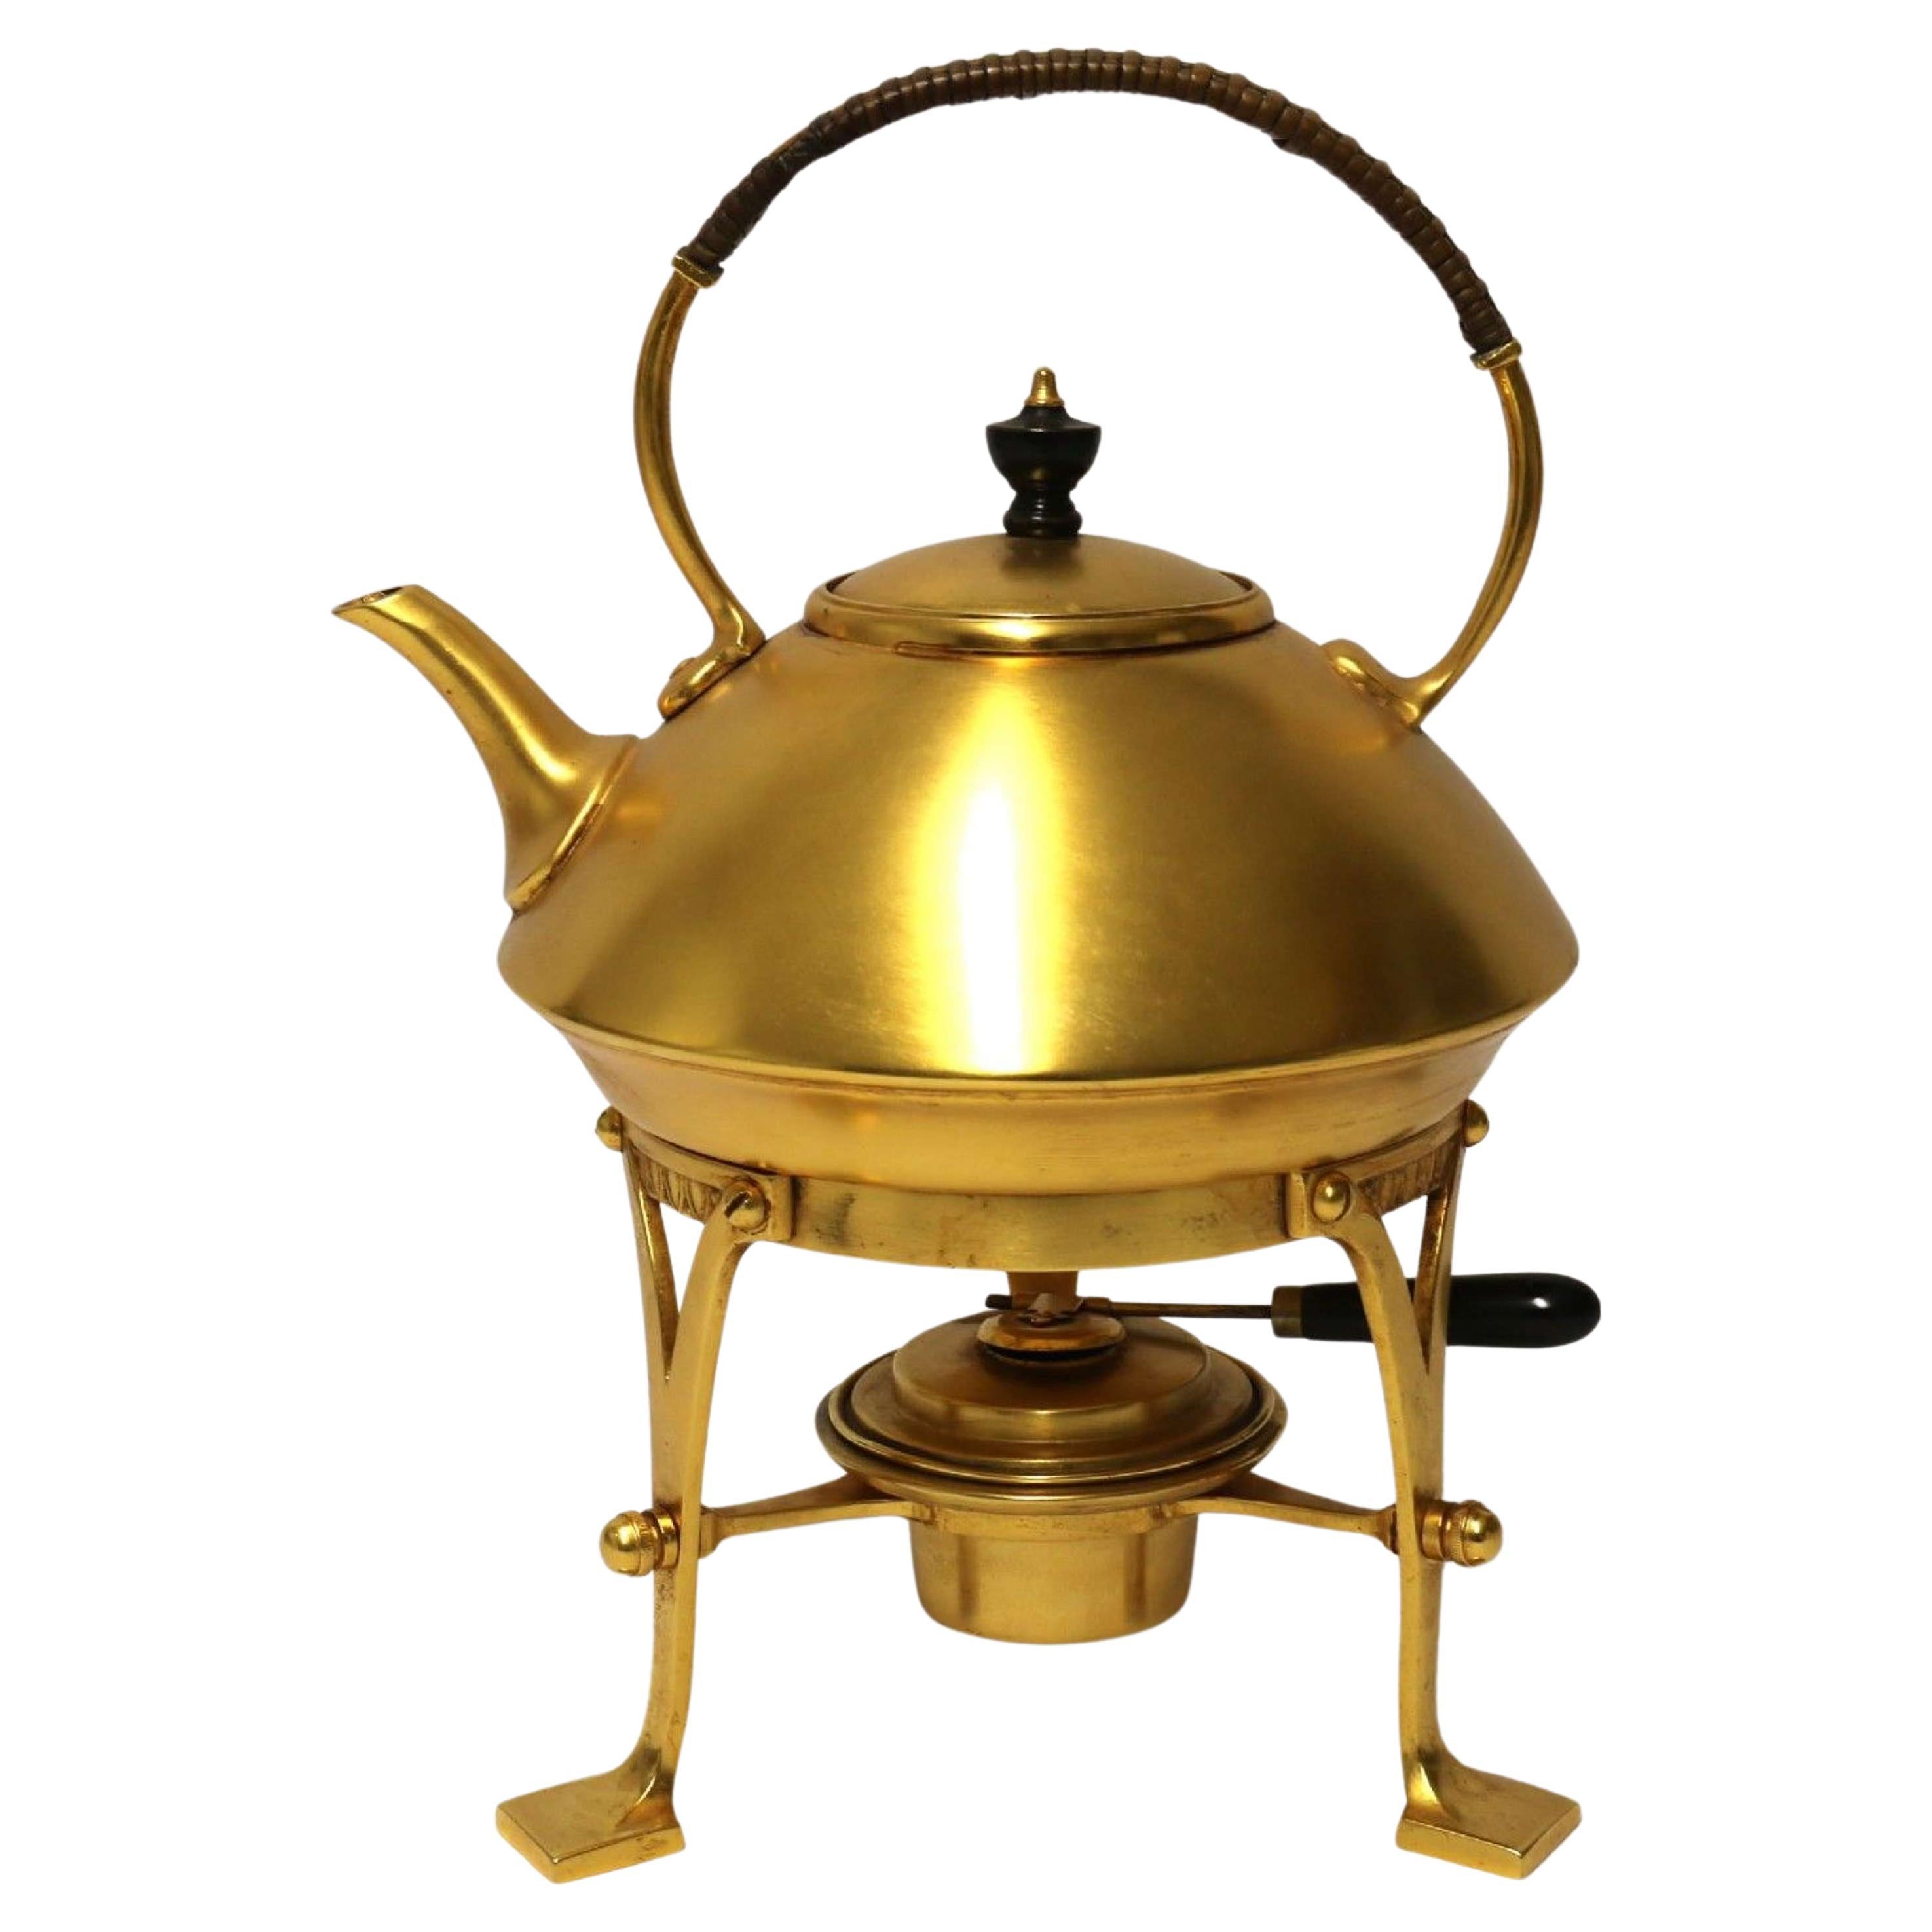  19th Century Aesthetic movement brass spirit kettle Circa 1890